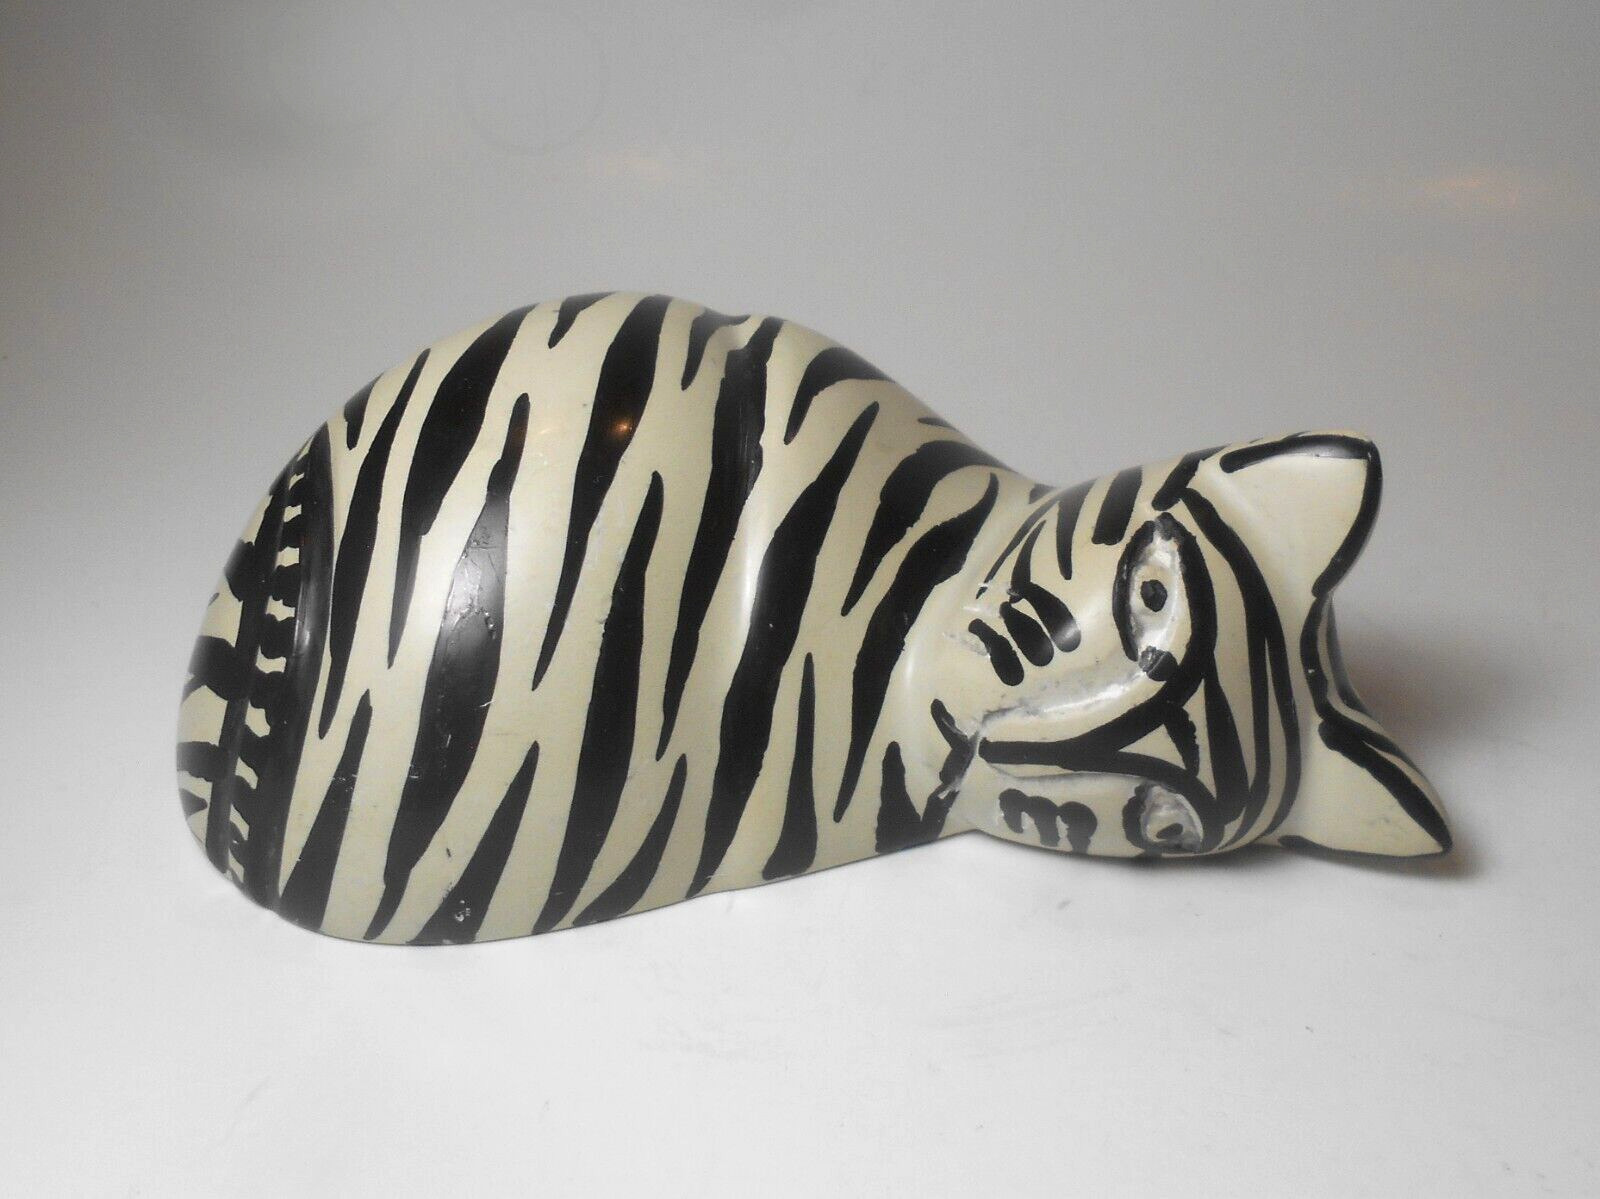 Black & White Striped Cat Kitty Stone Figurine Sculpture